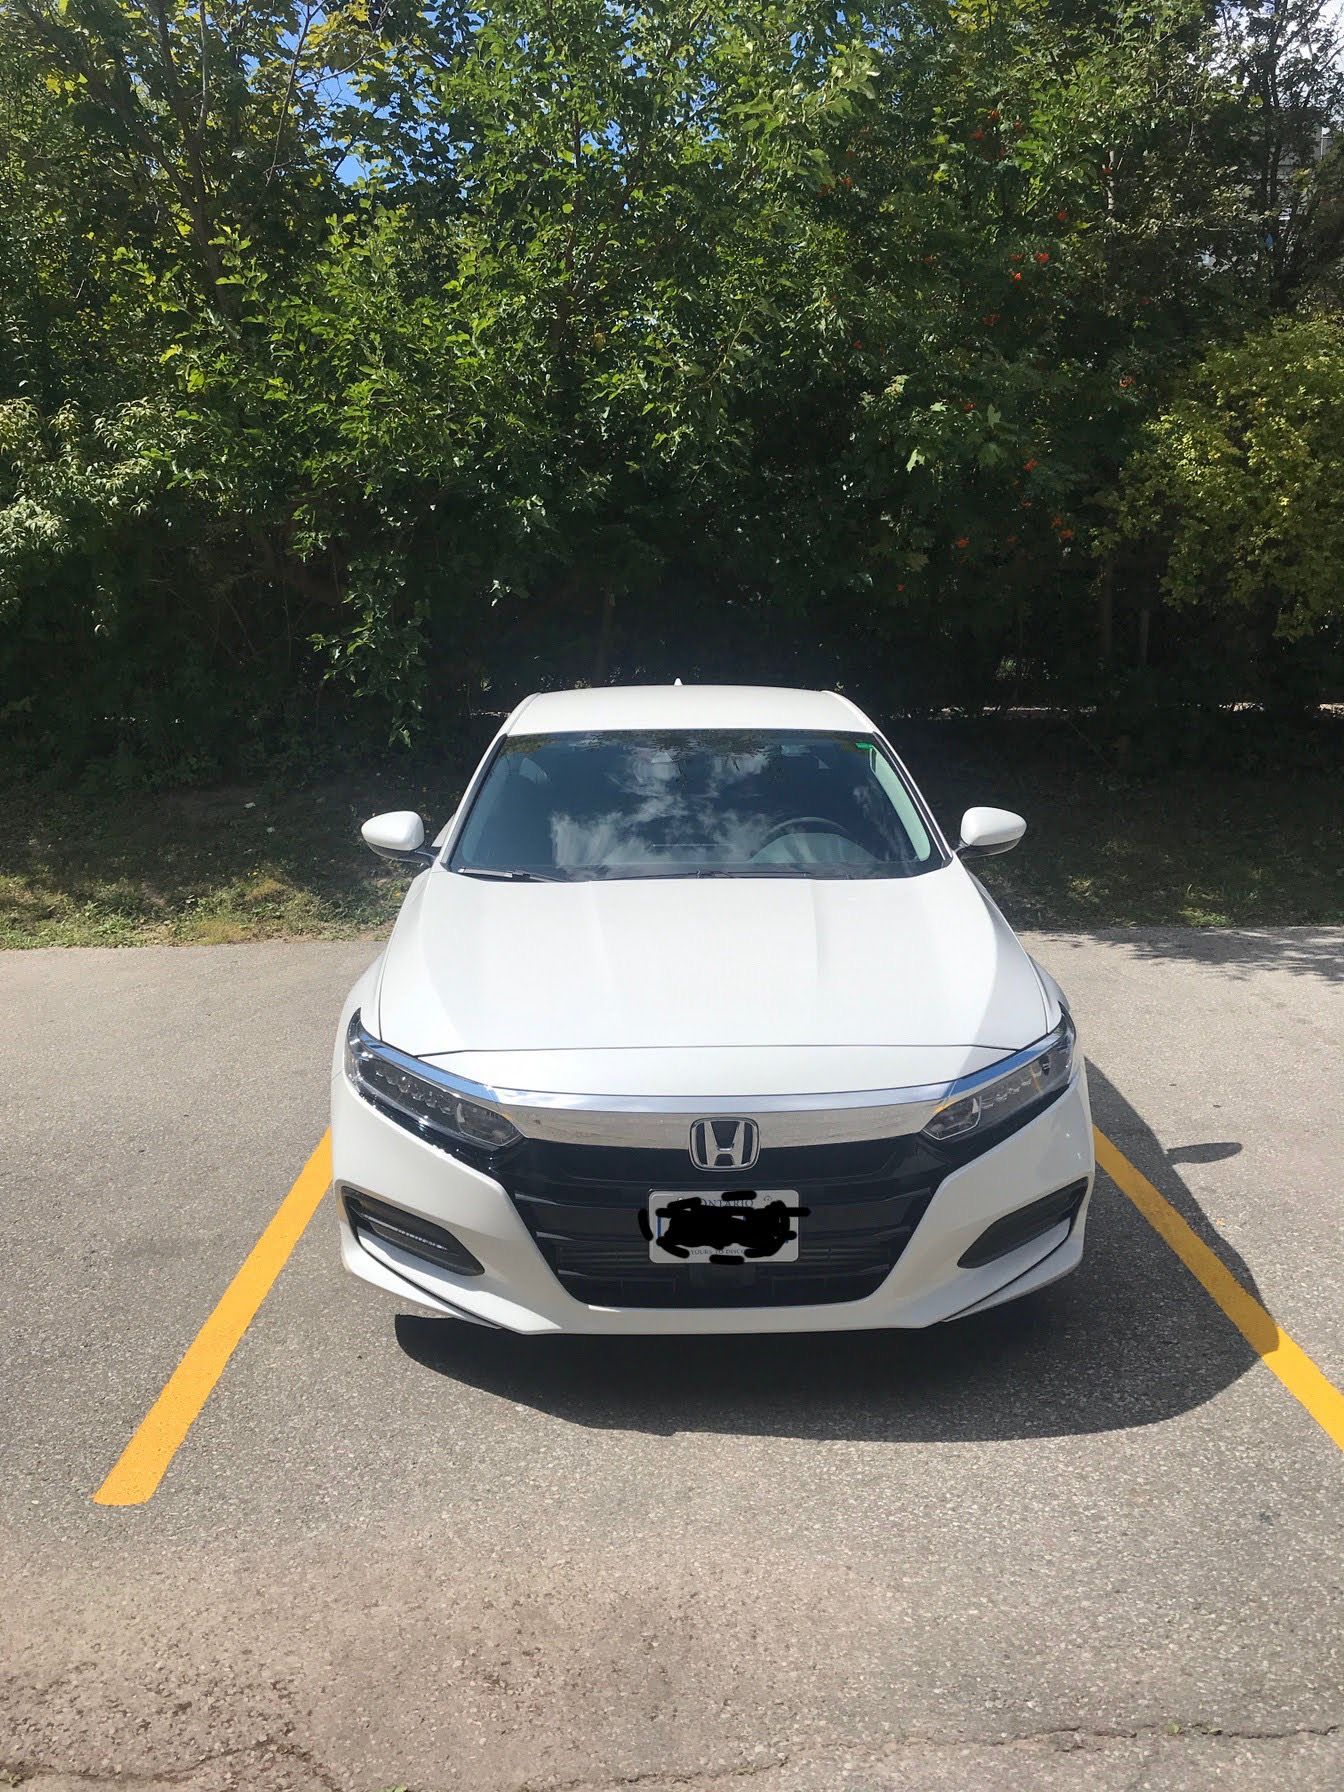 2019 Honda Accord null - INFOCAR - Toronto Auto Trading Platform